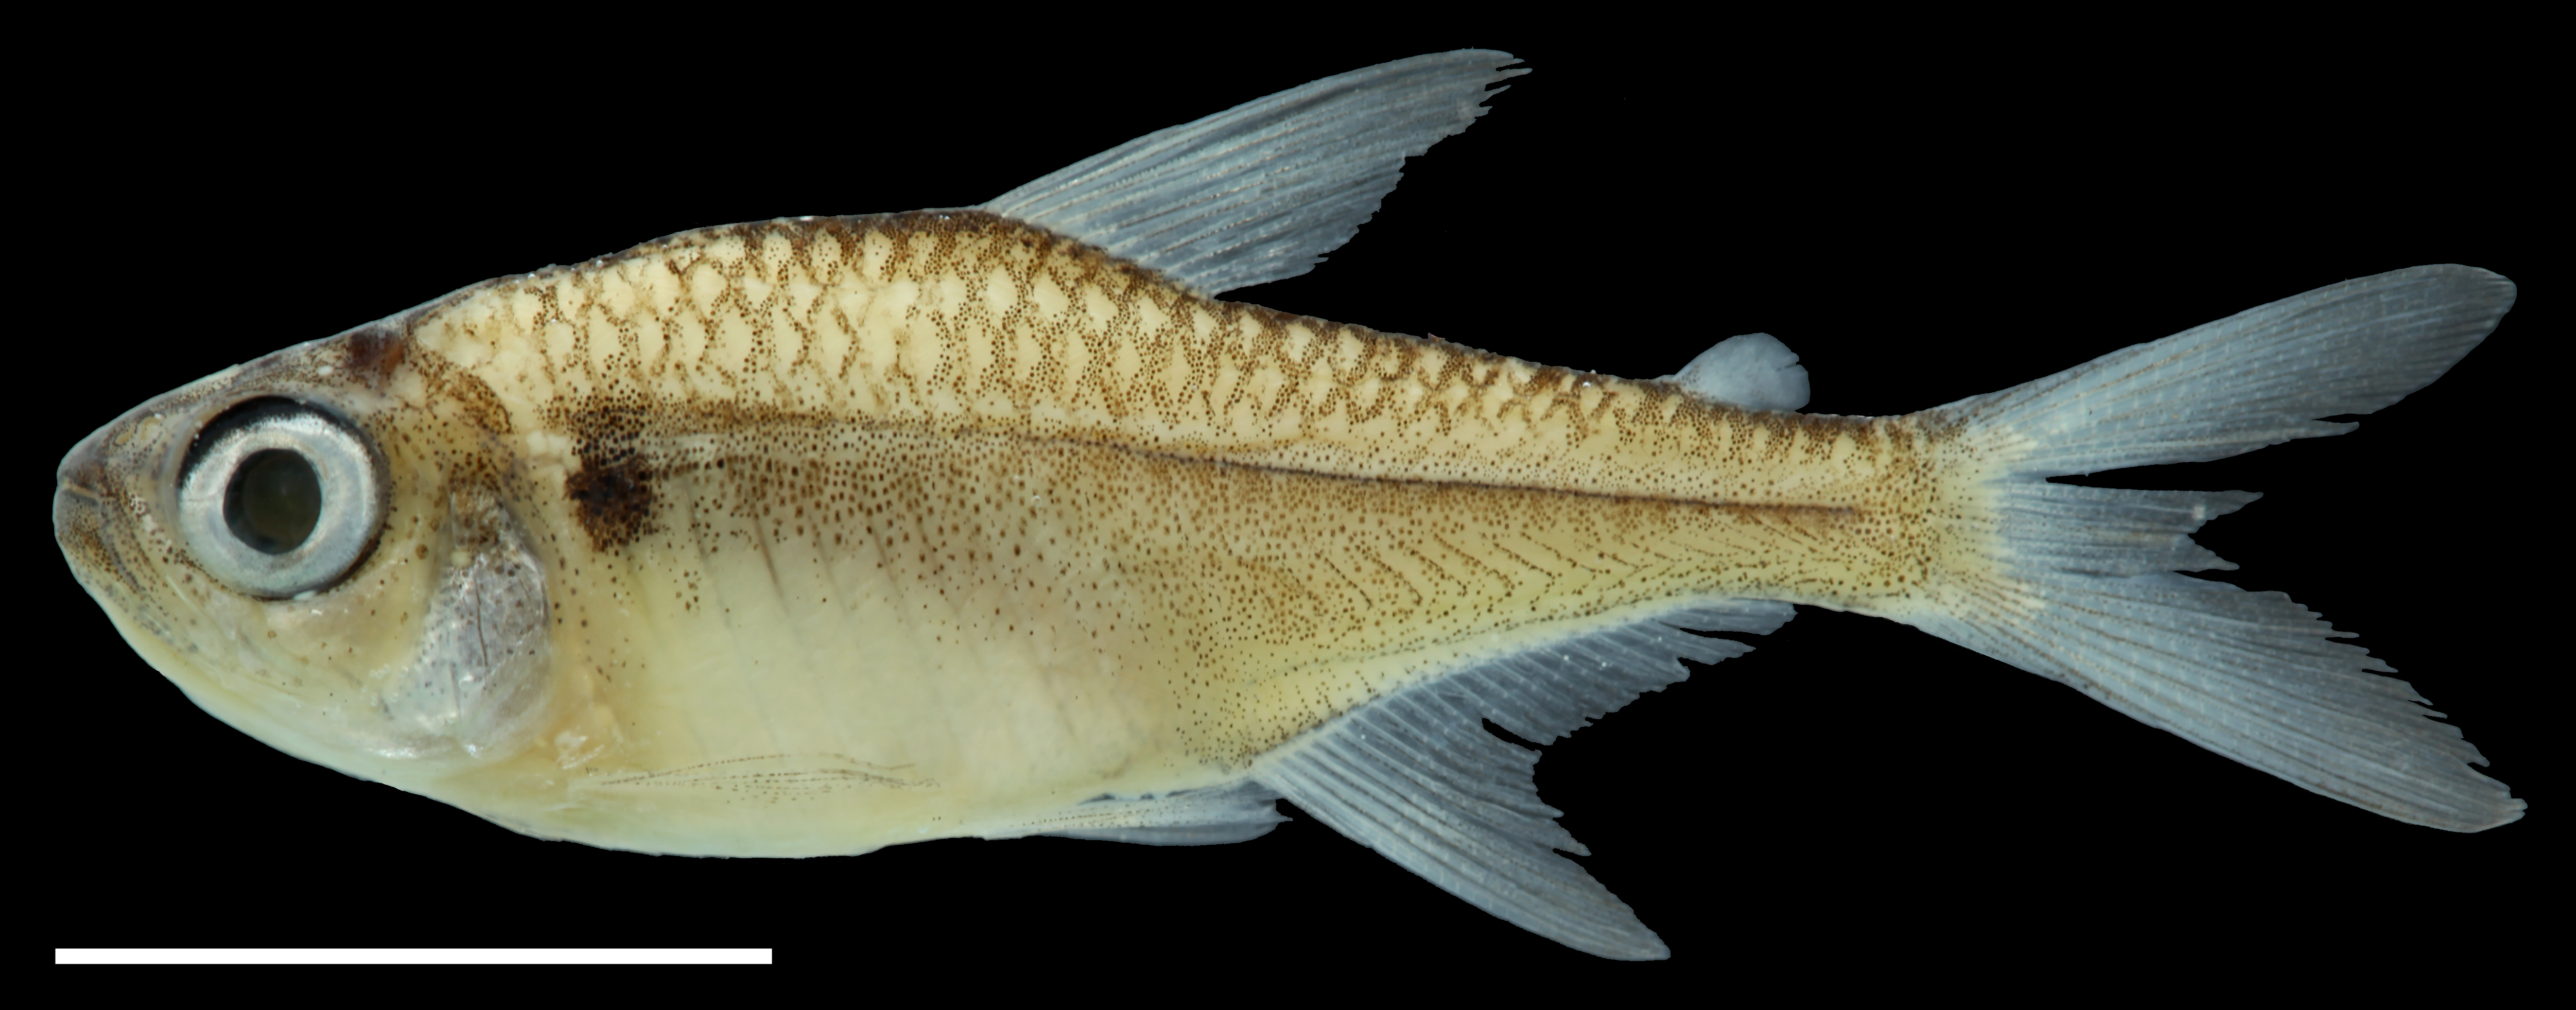 Paratype of <em>Hyphessobrycon taguae</em>, IAvH-P-11240_Lateral, 26.3 mm SL (scale bar = 1 cm). Photograph by C. DoNascimiento